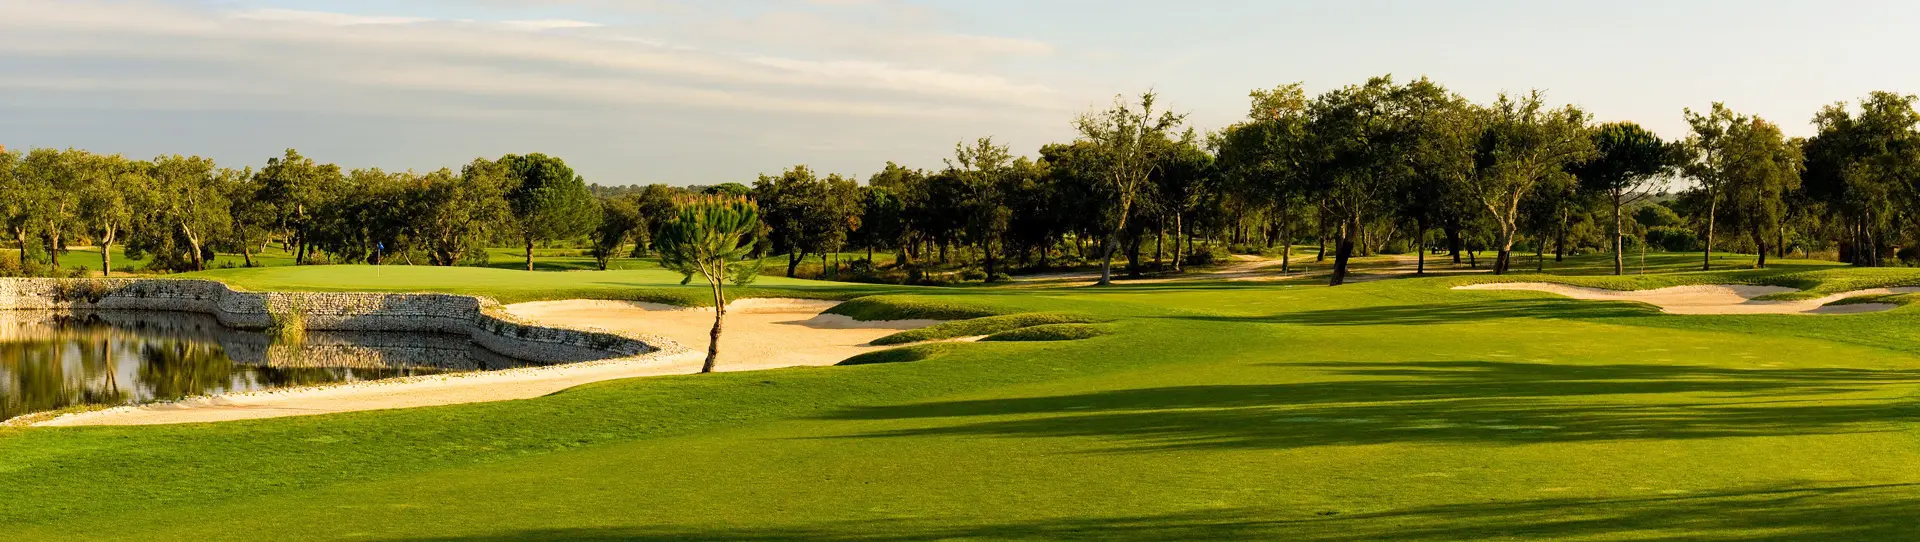 Portugal golf courses - Ribagolfe Lakes Golf Course (ex Riba I) - Photo 2